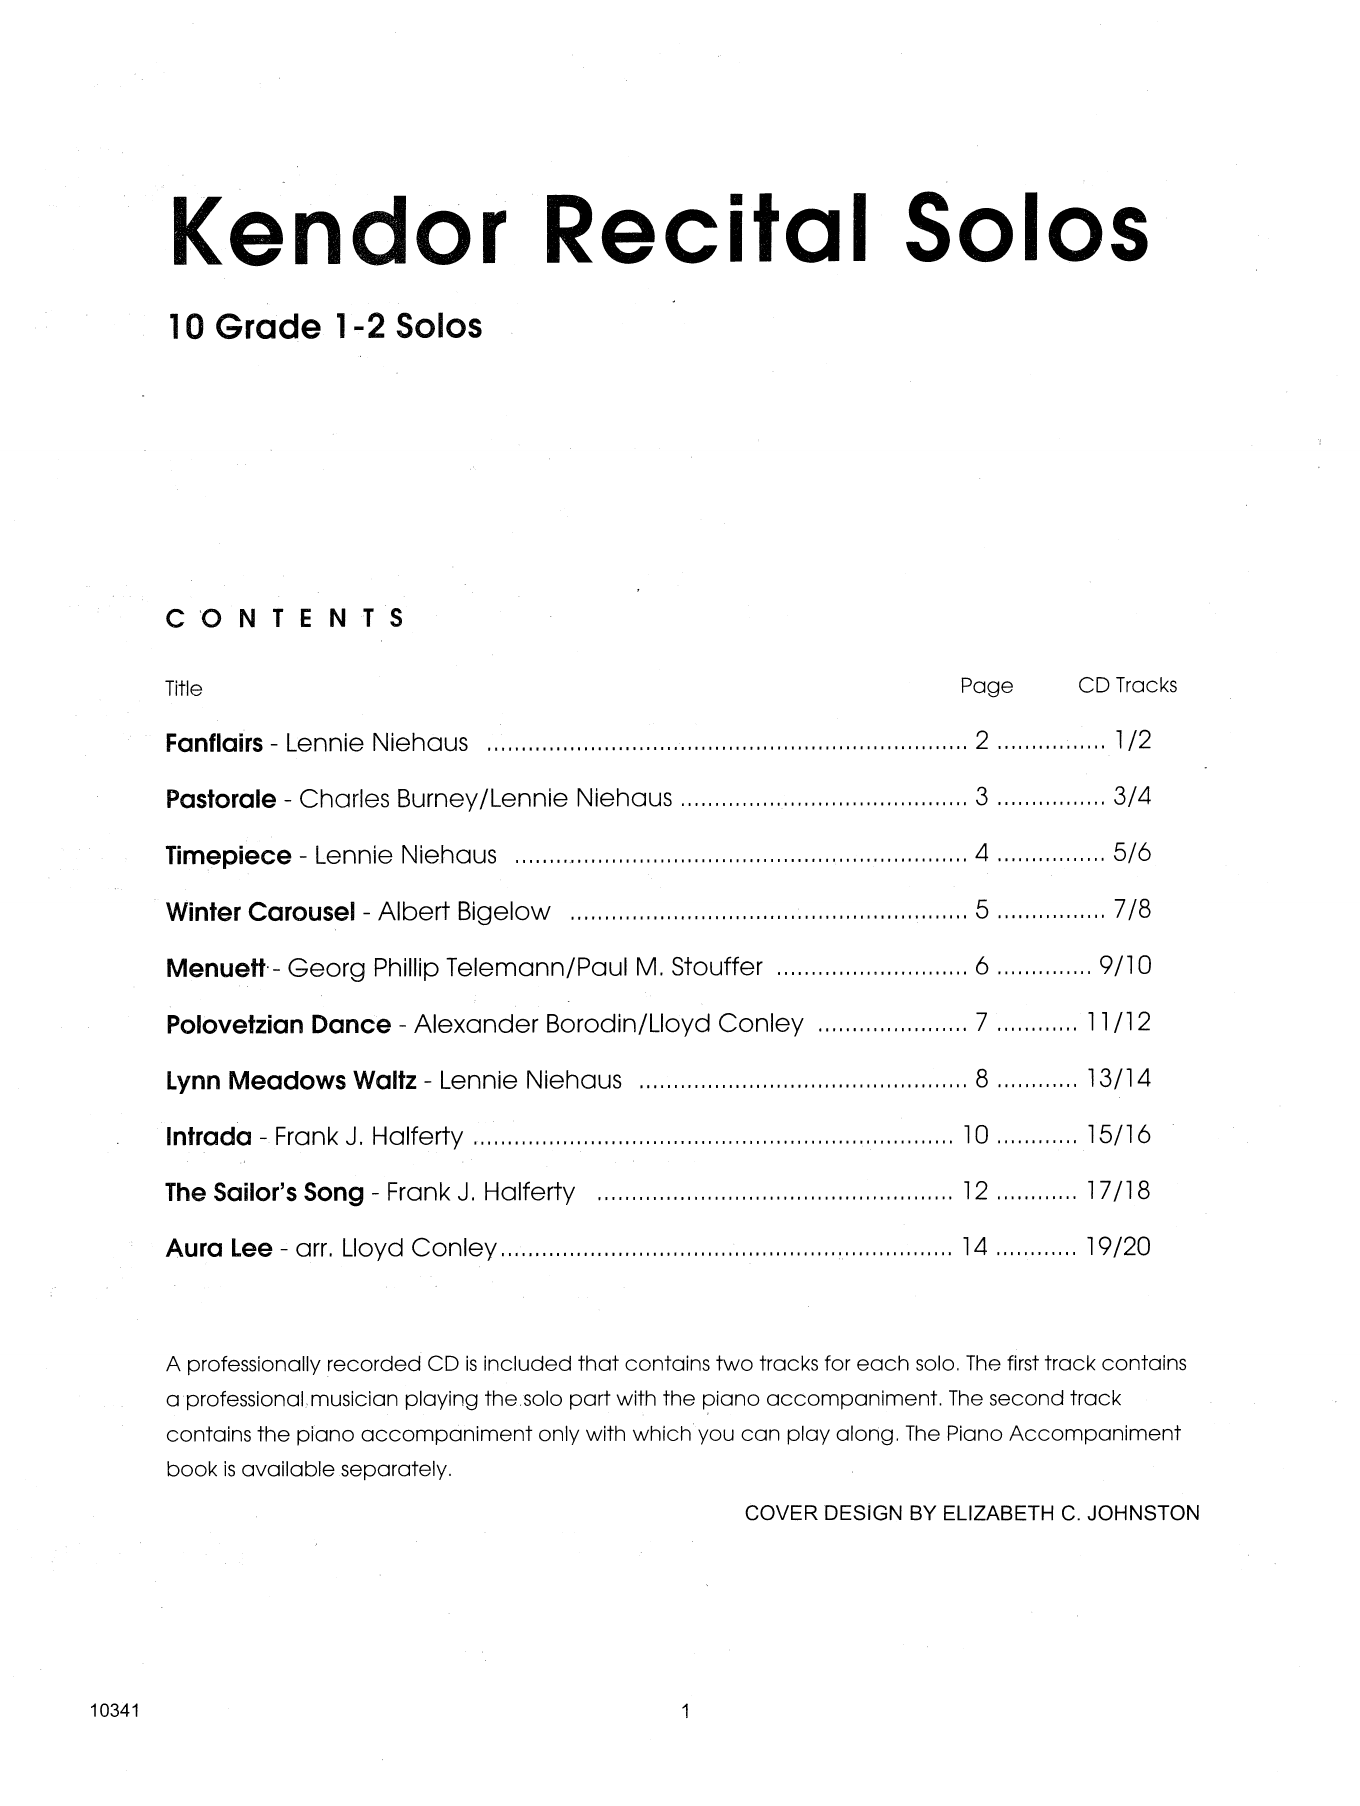 Download Various Kendor Recital Solos - Horn In F - Solo Sheet Music